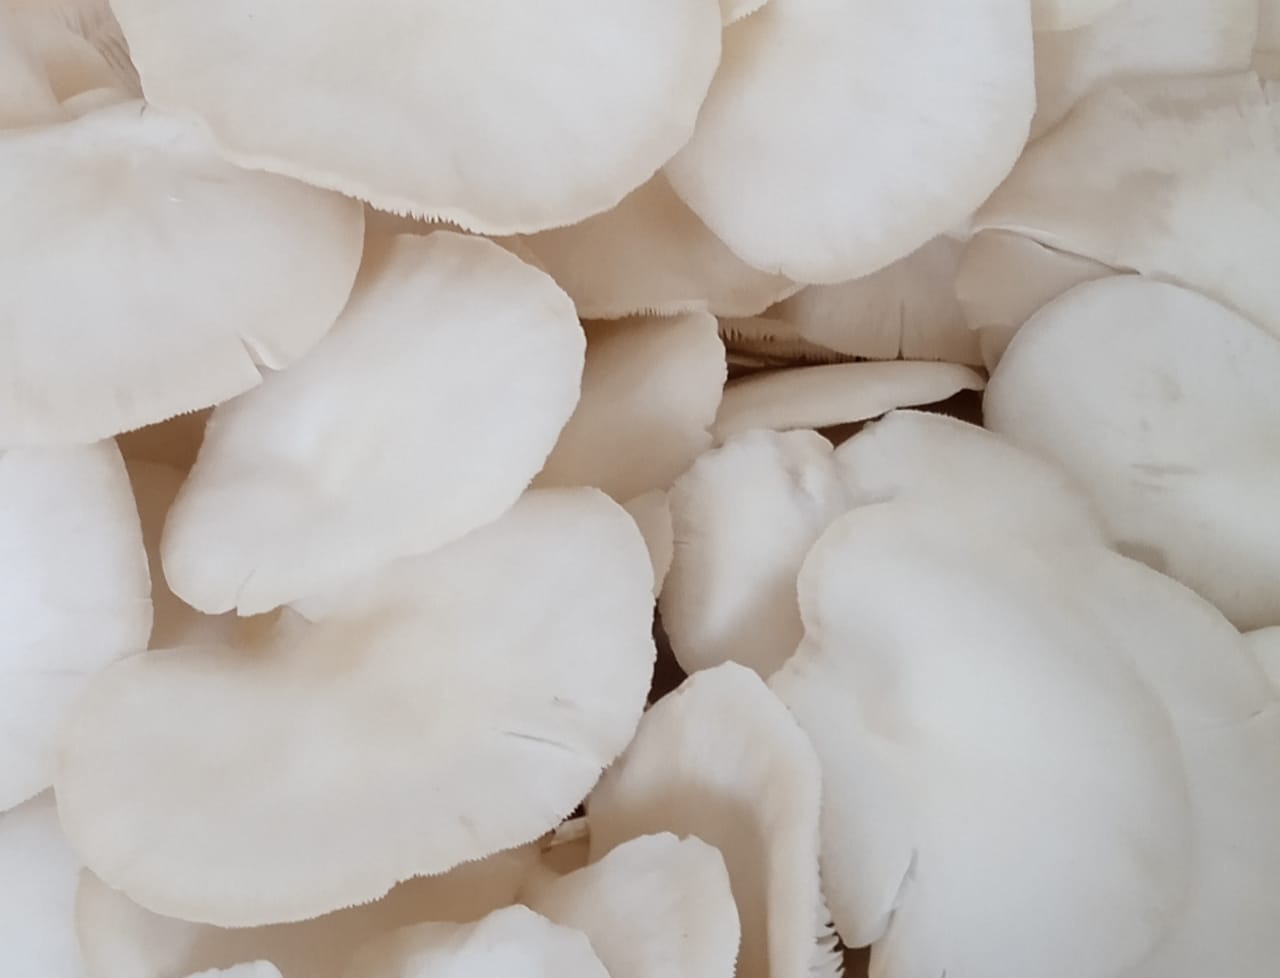 Fresh Oyster mushrooms